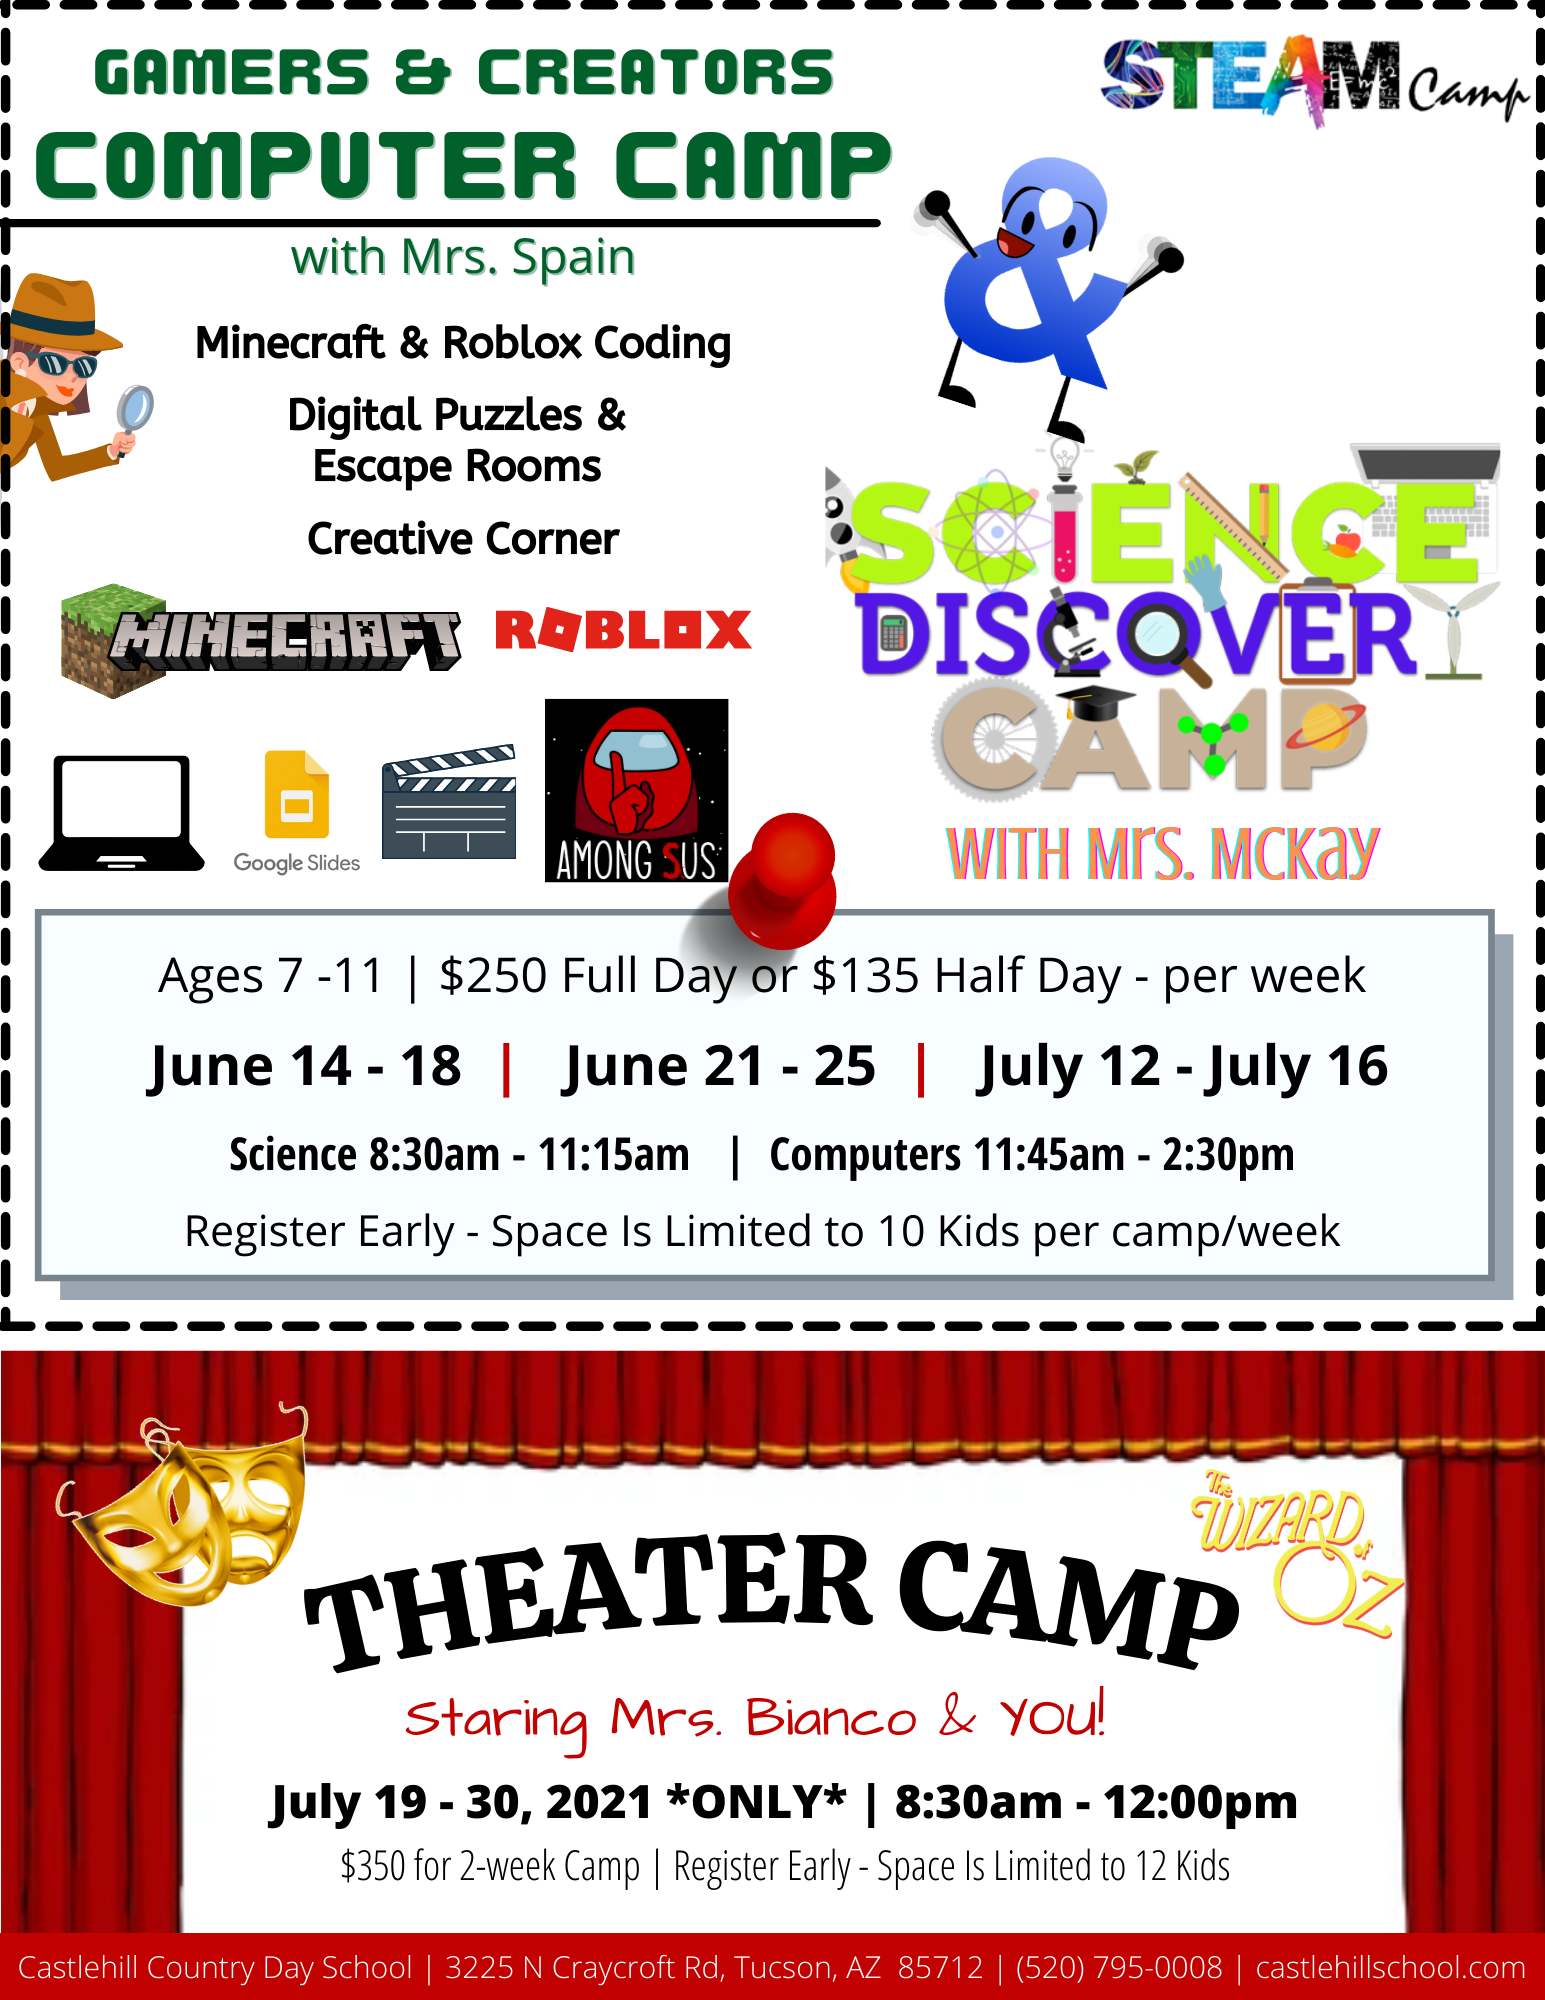 Summer Camp 2021 Castlehill Country Day School Private Elementary School Tucson Az - escape summer camp roblox